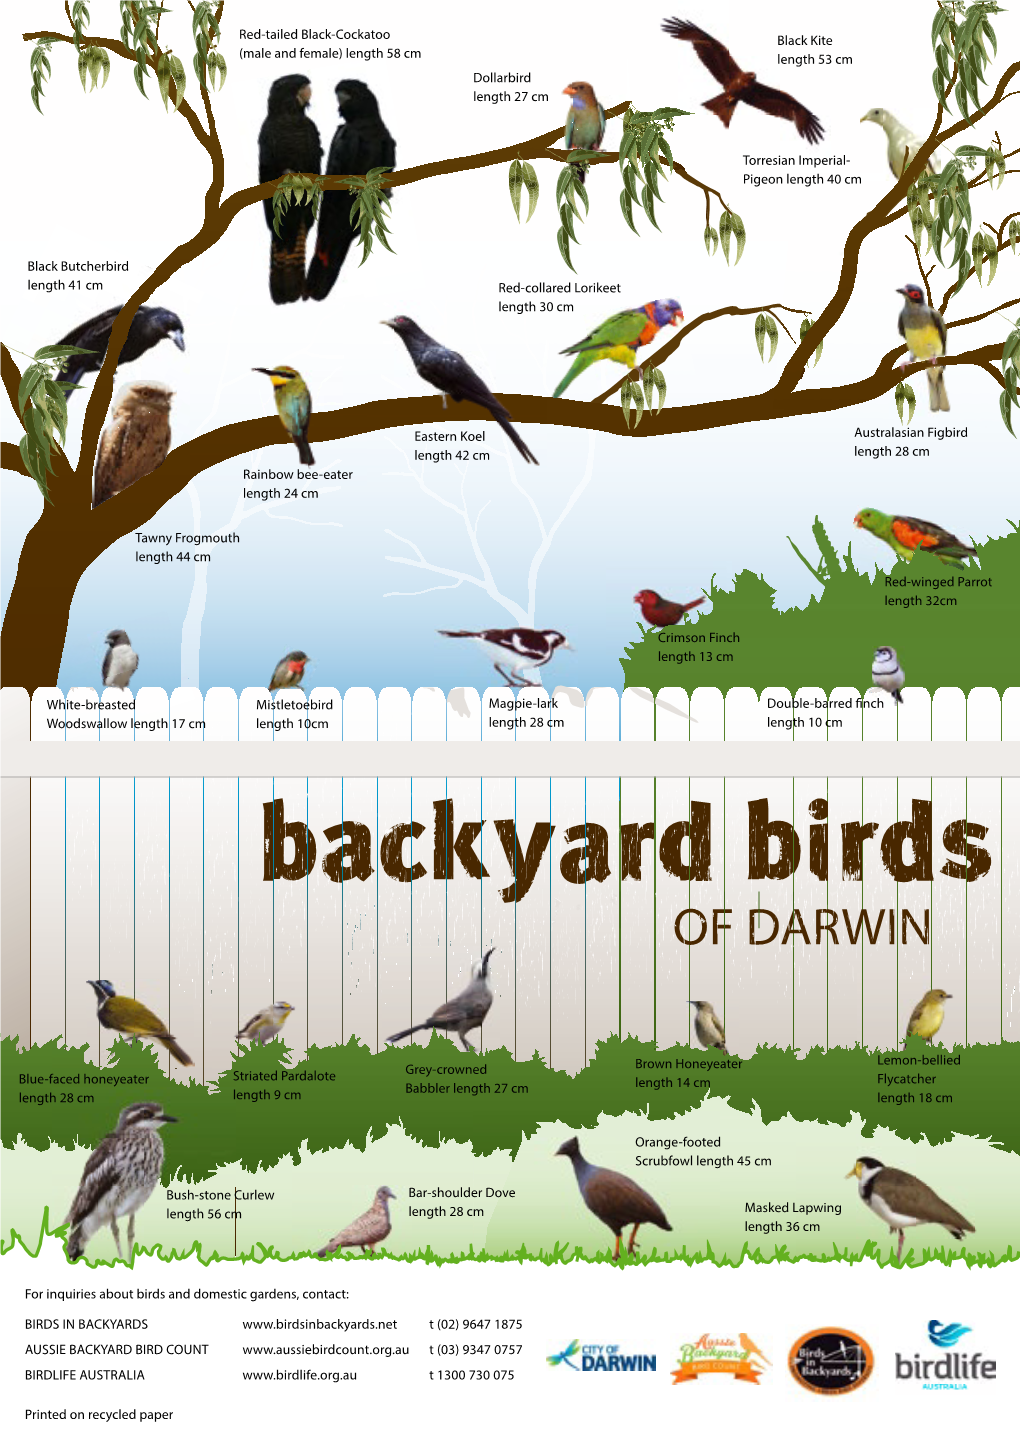 Backyard Birds of Darwin